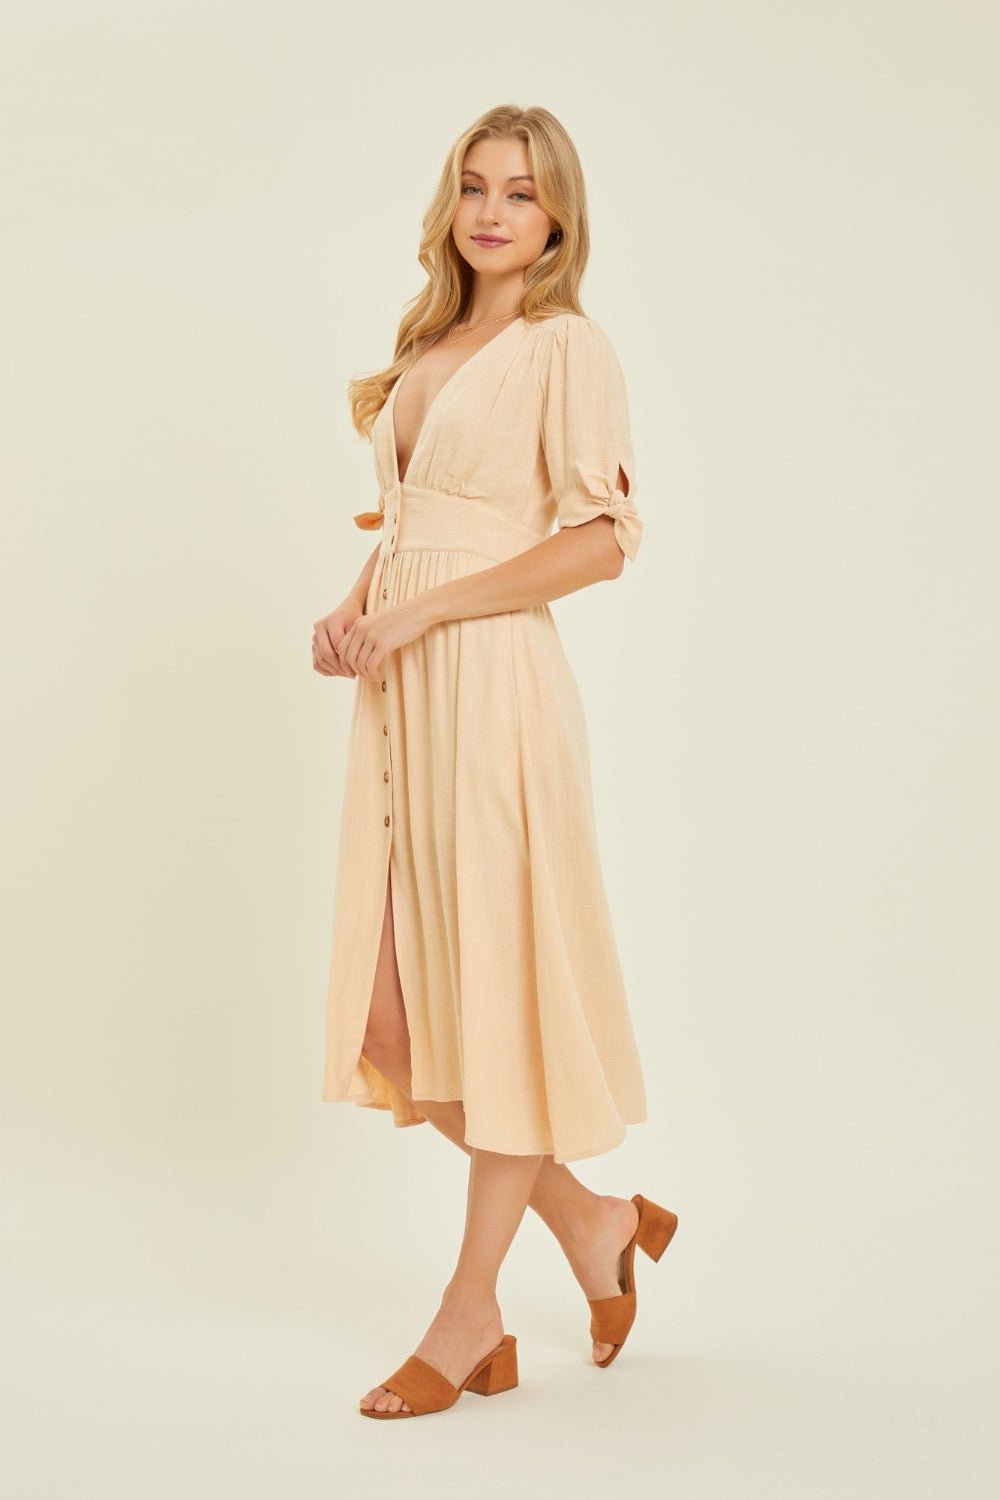 Textured V-Neck Button-Down Midi Dress in CreamMidi DressHEYSON